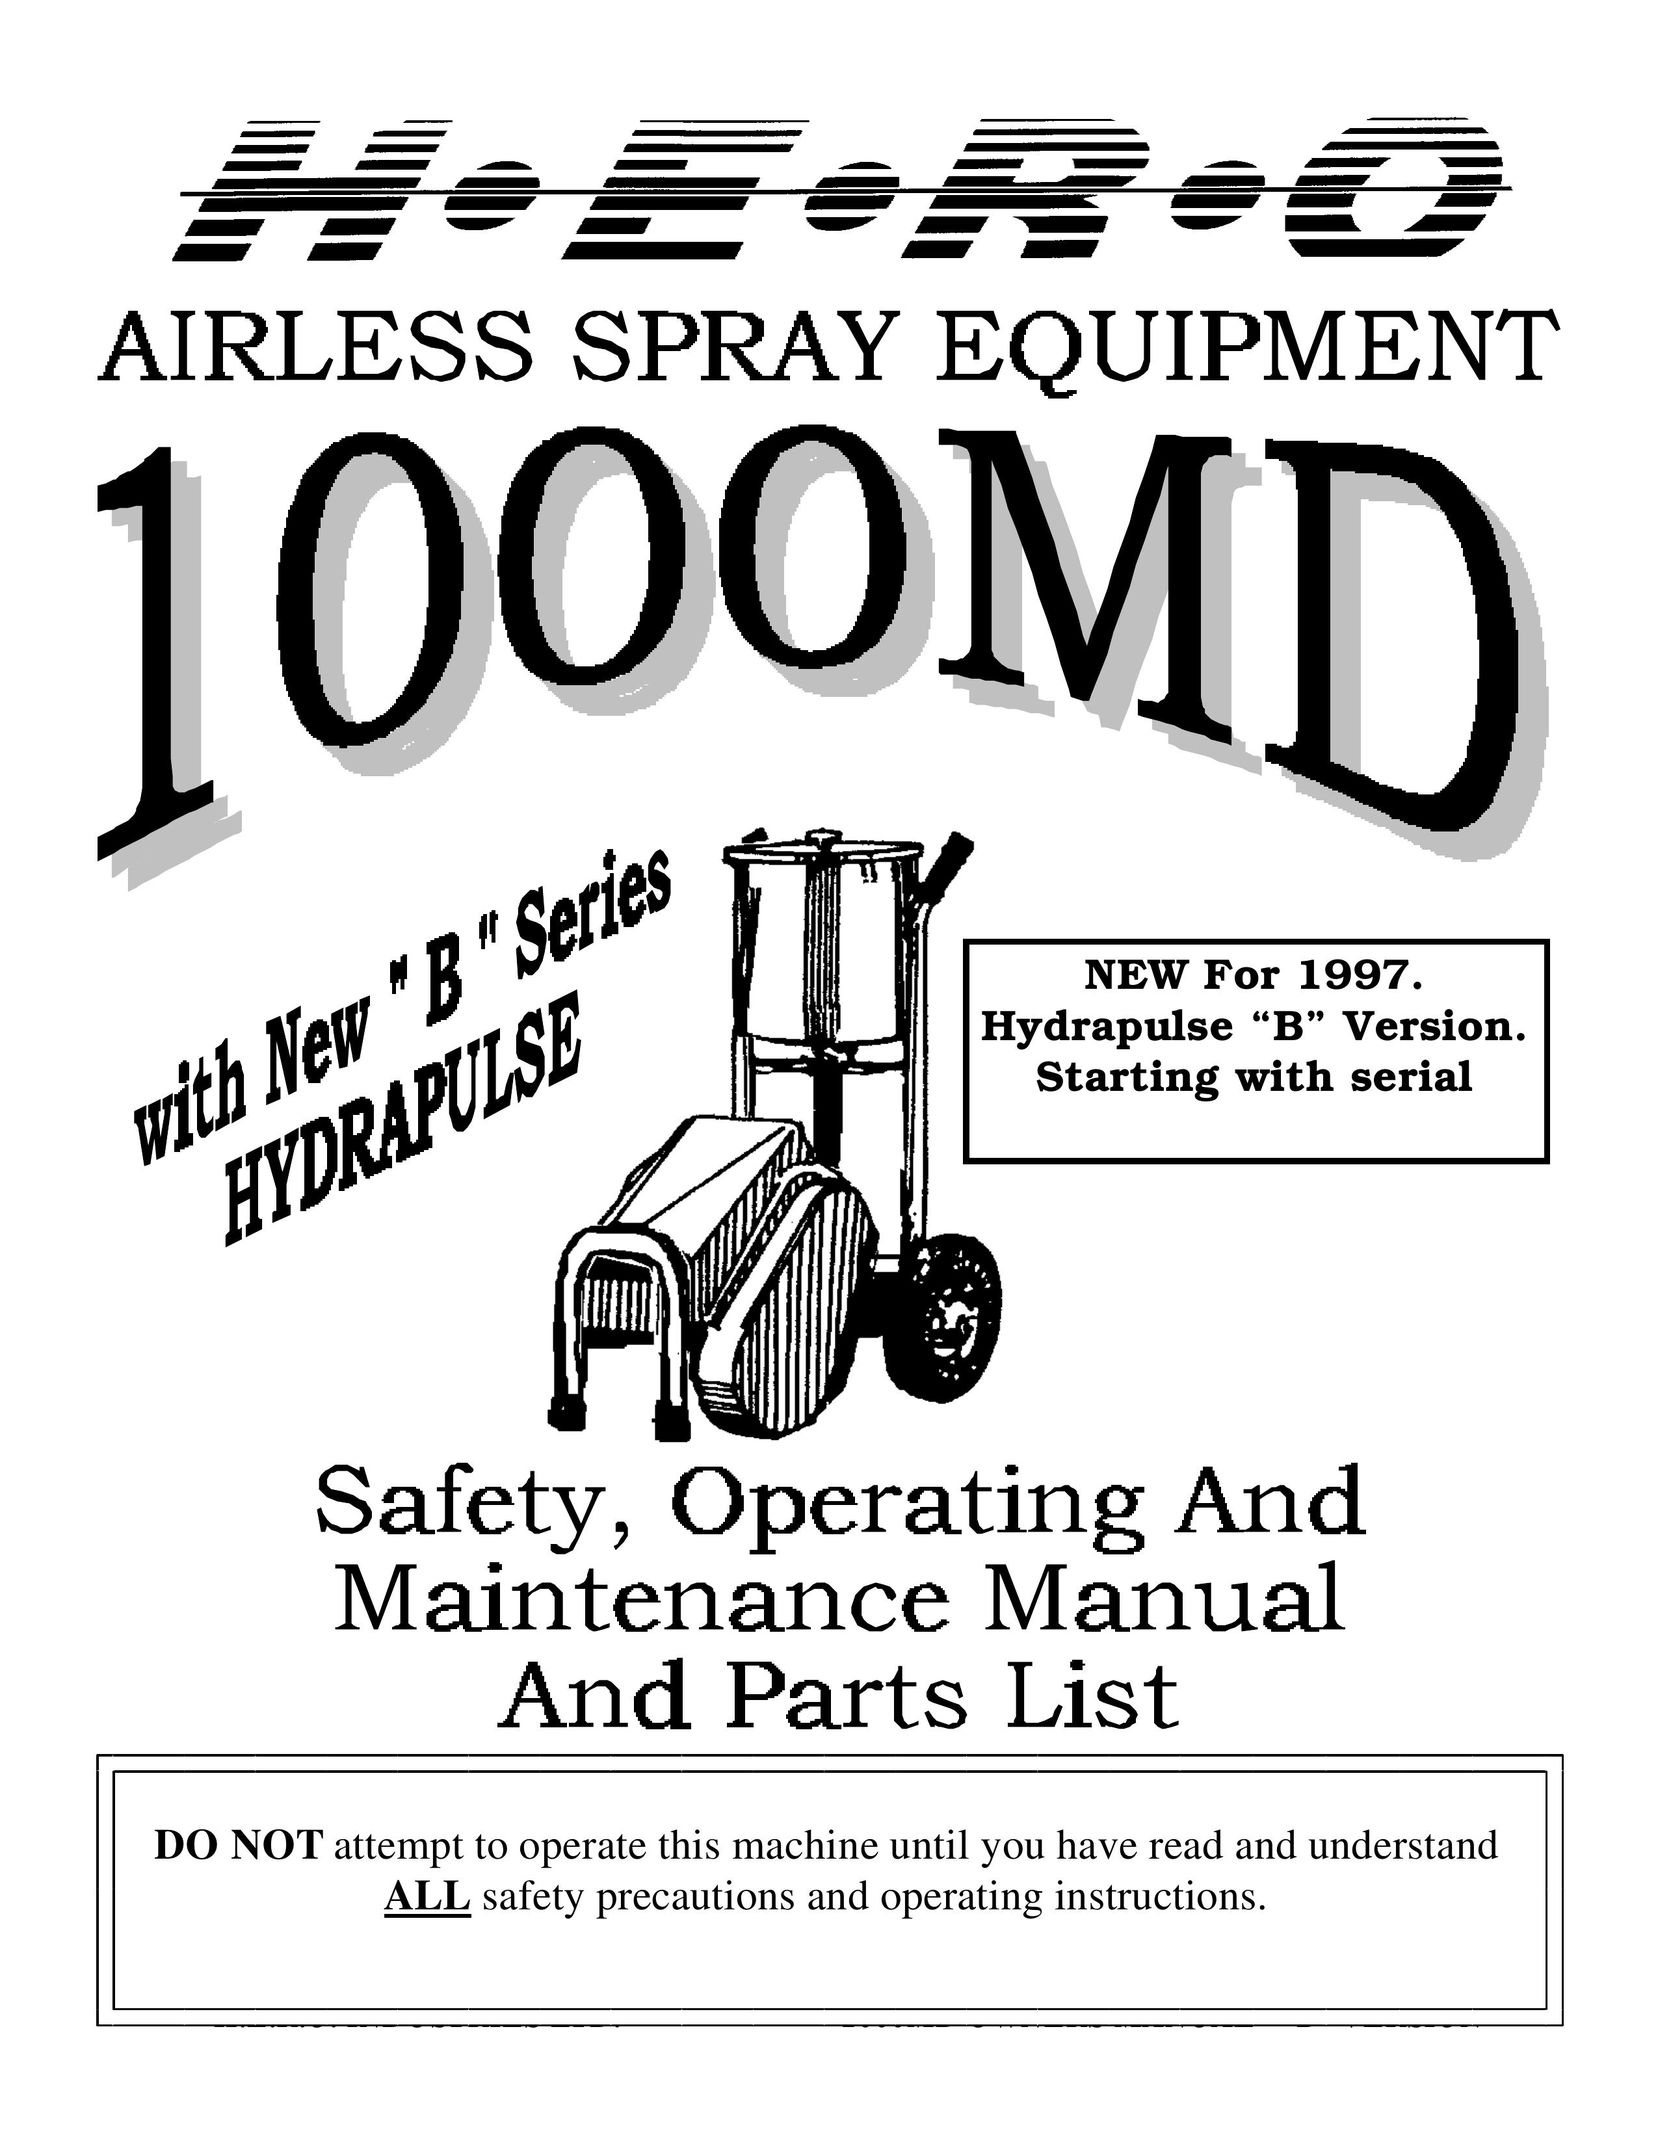 I.C.T.C. Holdings Corporation 1000MD Paint Sprayer User Manual